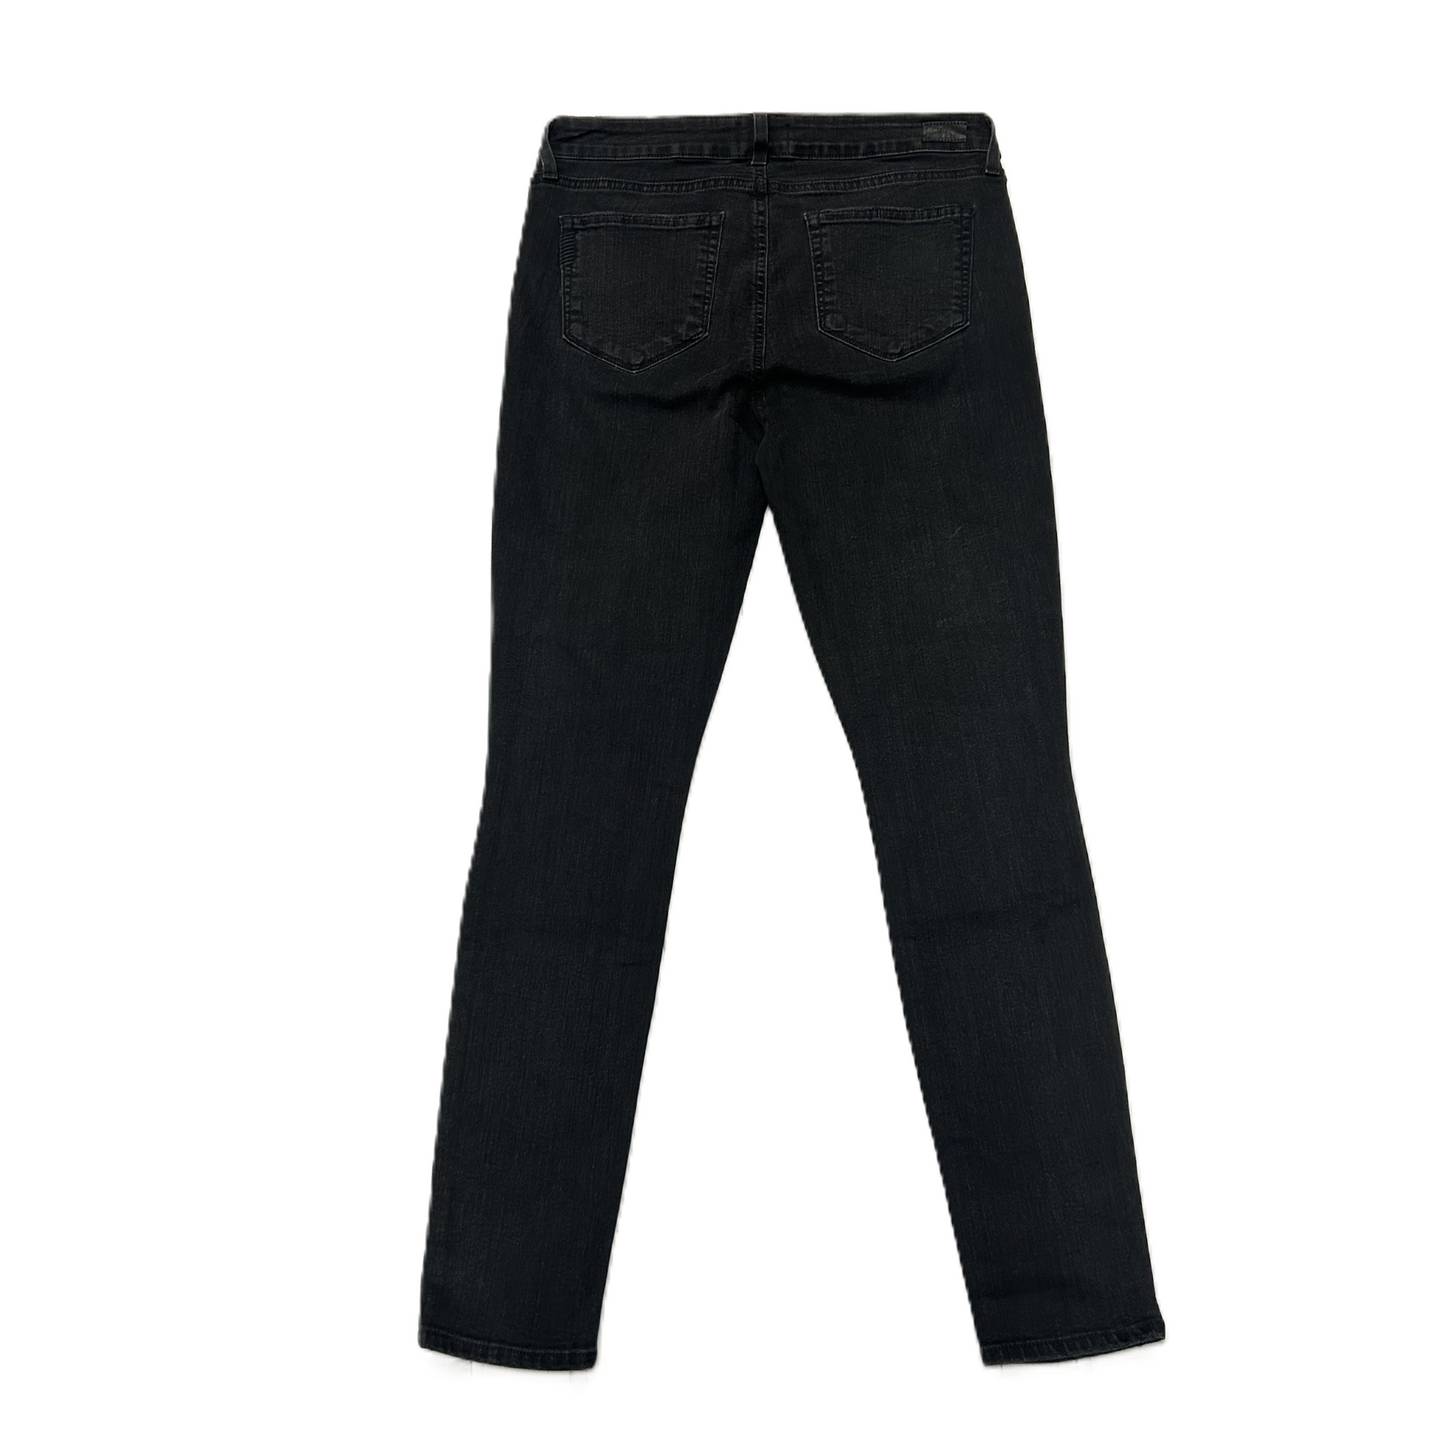 Black Jeans Designer By Paige, Size: 12